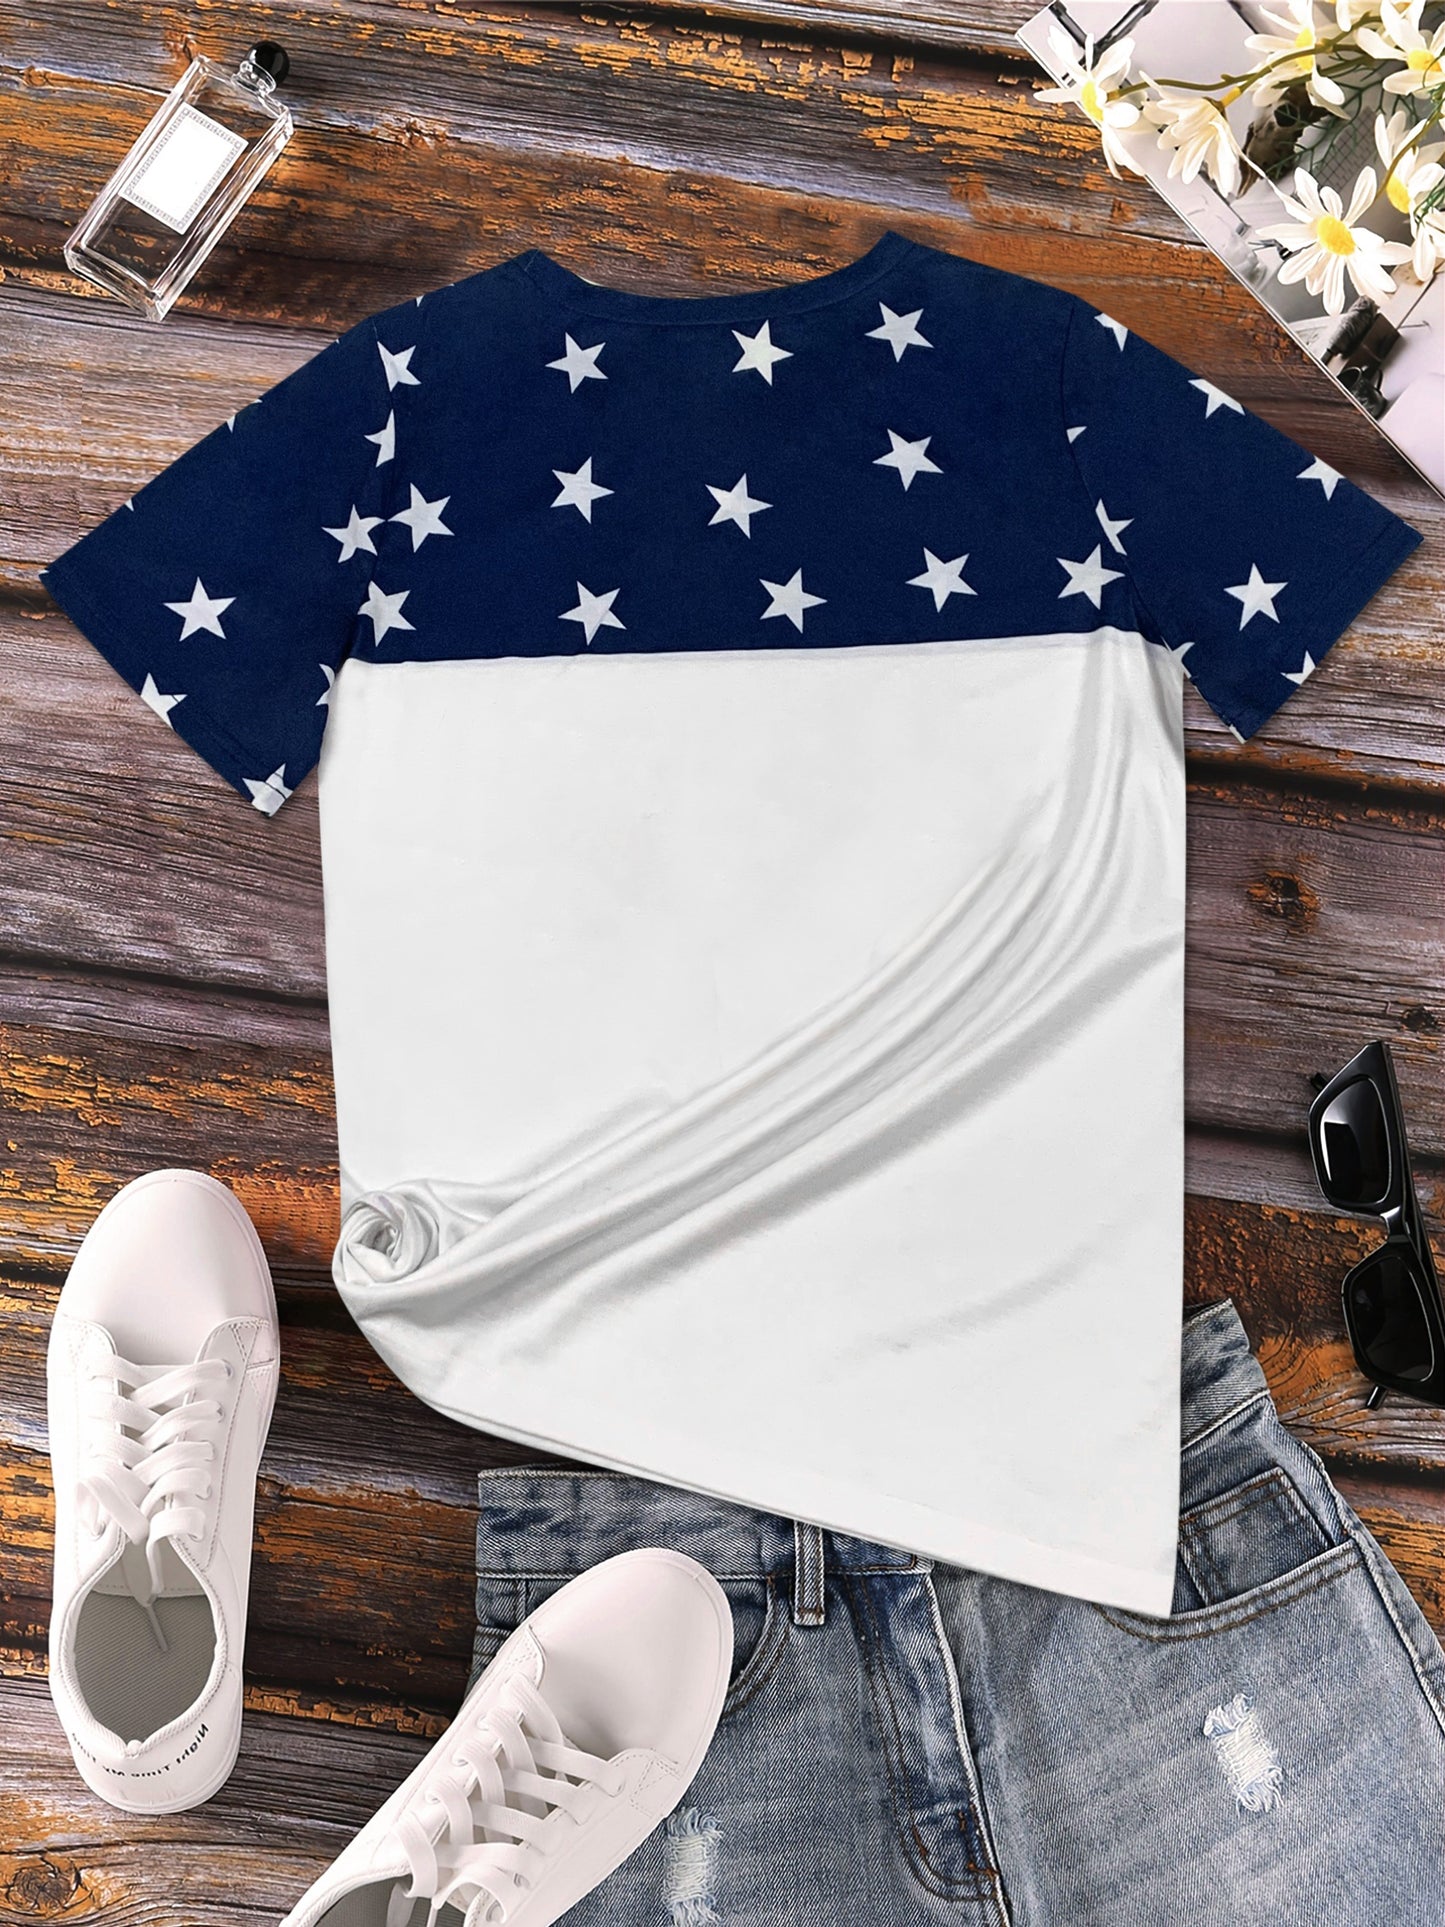 Blessed Patriotic American Flag Women's Christian T-shirt claimedbygoddesigns